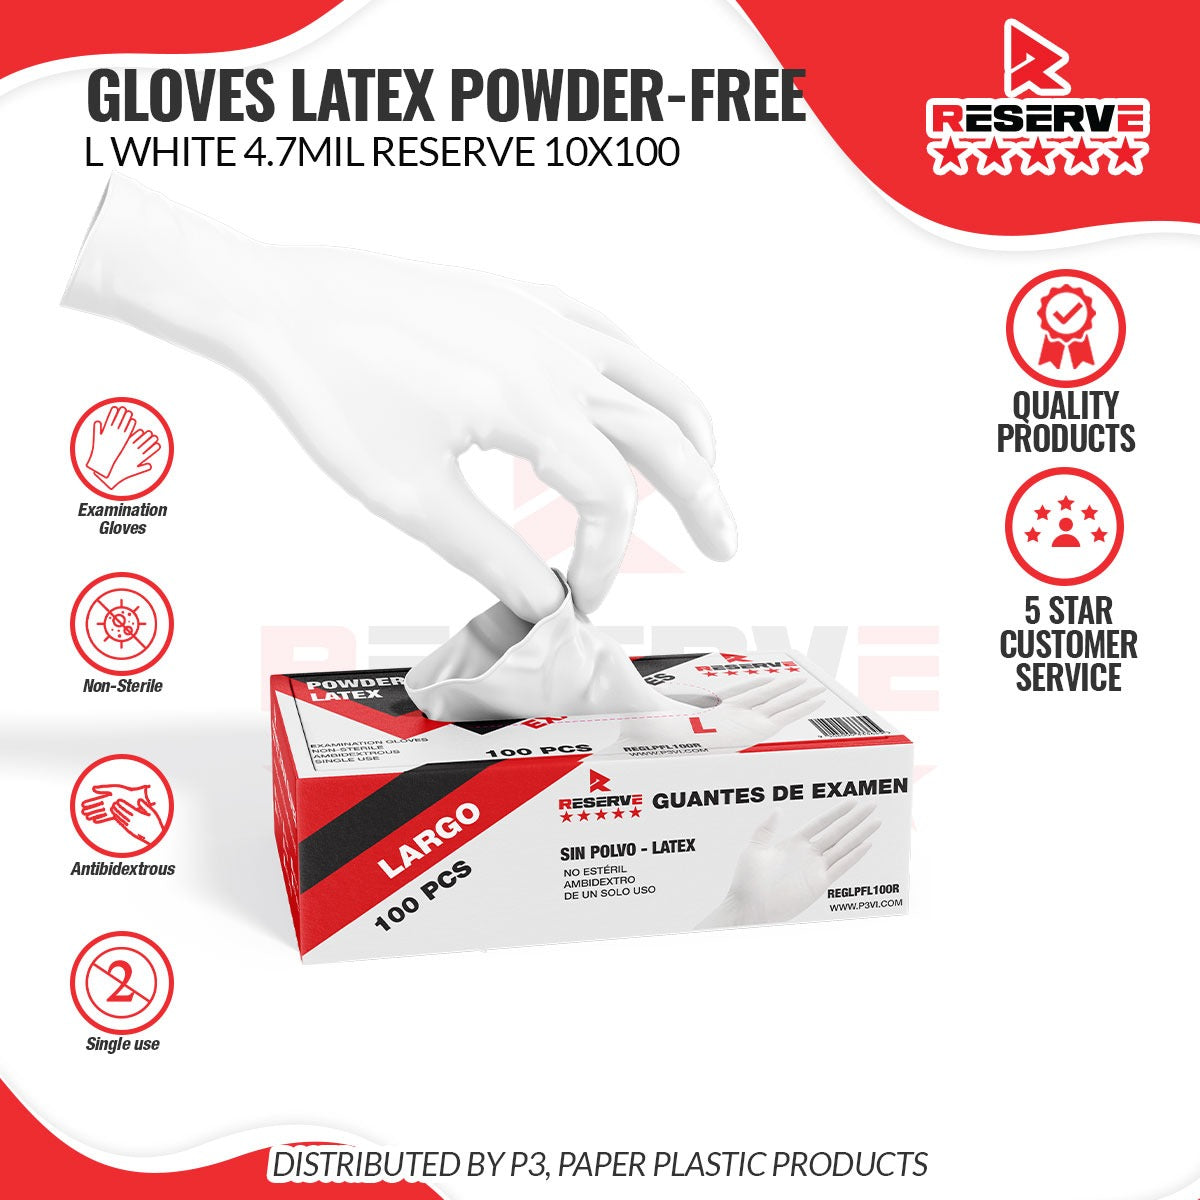 Gloves Latex Powder-Free L White 4.7mil Reserve 10/100